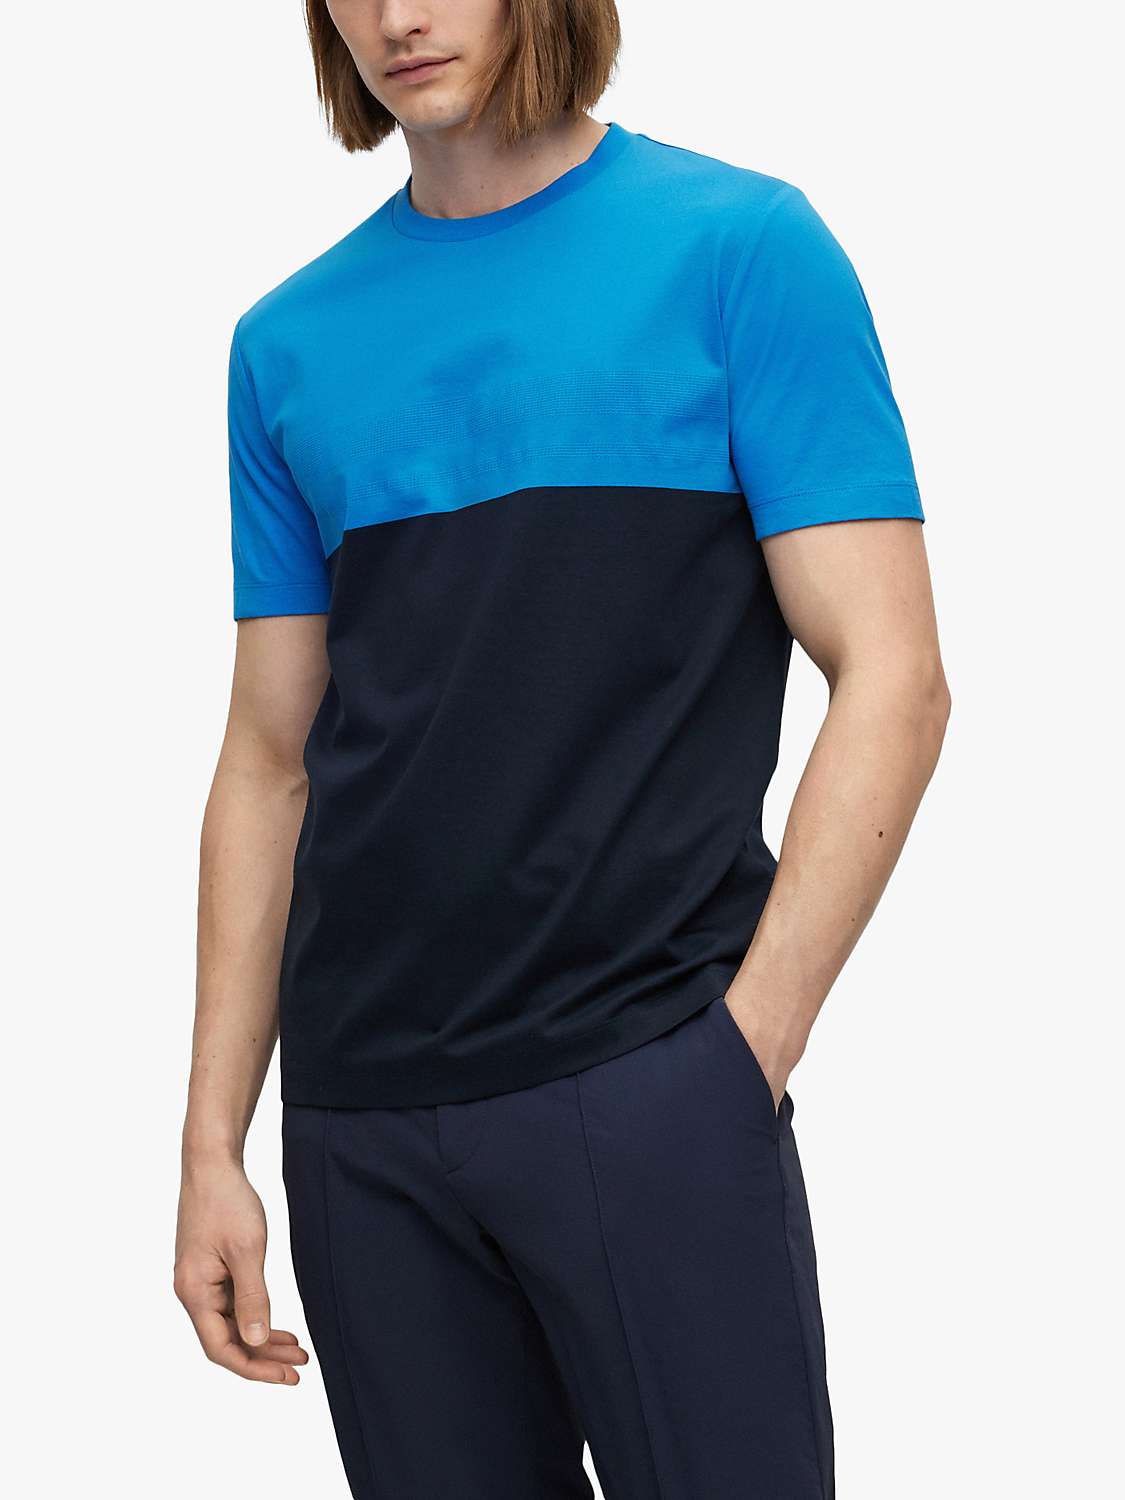 Buy BOSS Tiburt 411 Short Sleeve T-Shirt, Blue/Black Online at johnlewis.com